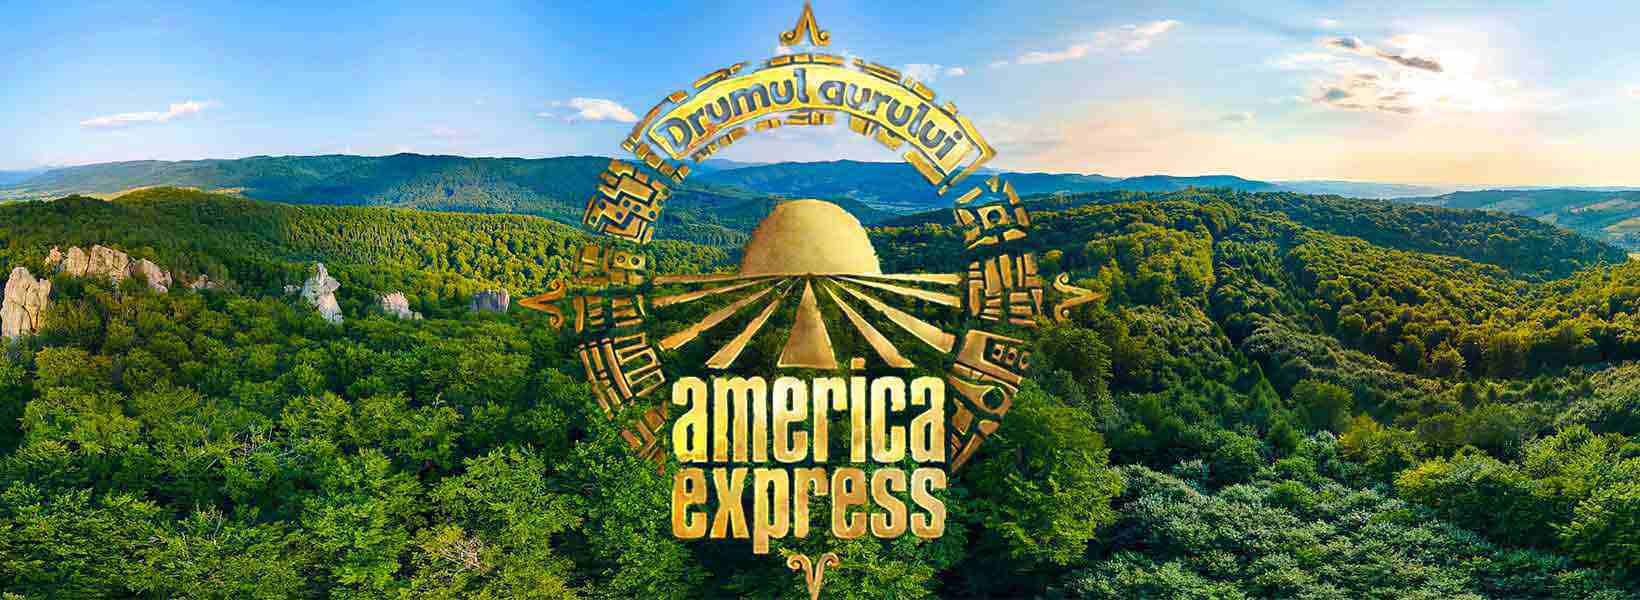 banner america express